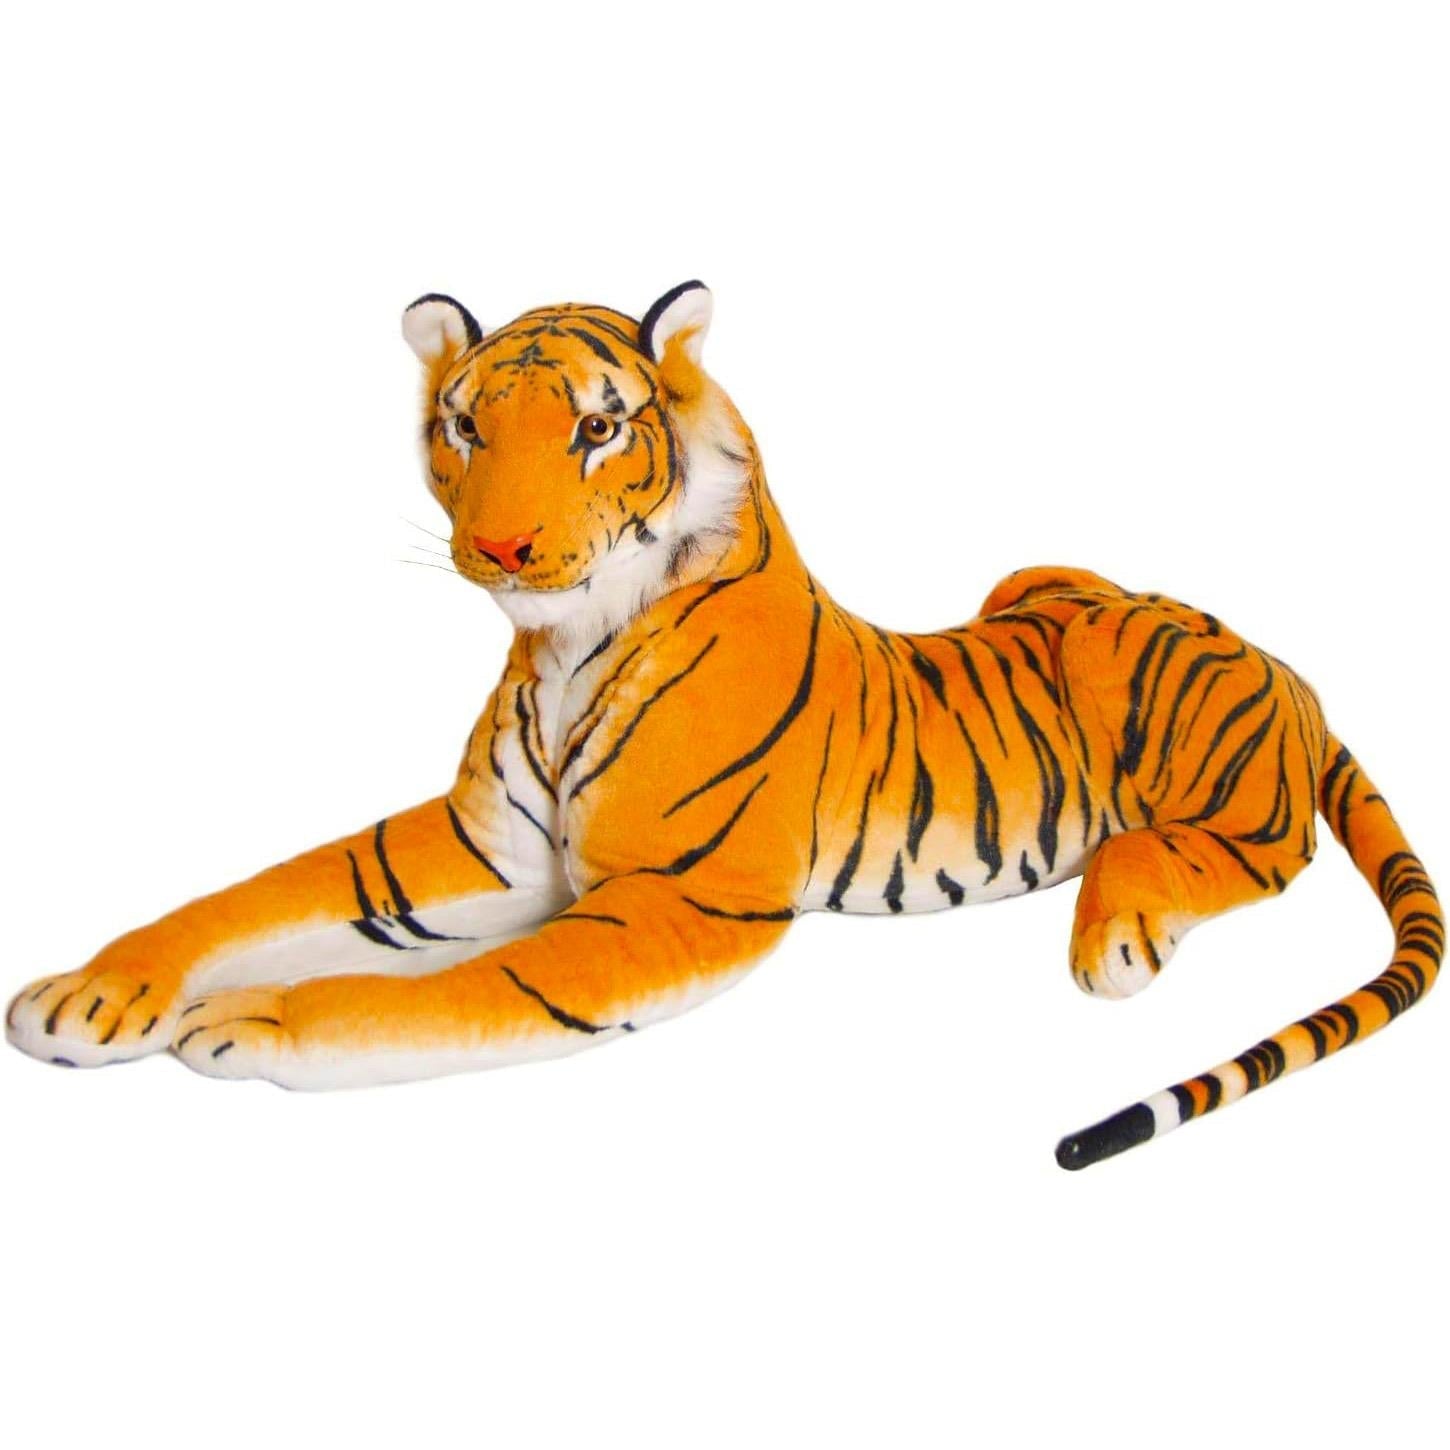 MTS toyfigure Medium Bengal Tiger Soft Plush Toy